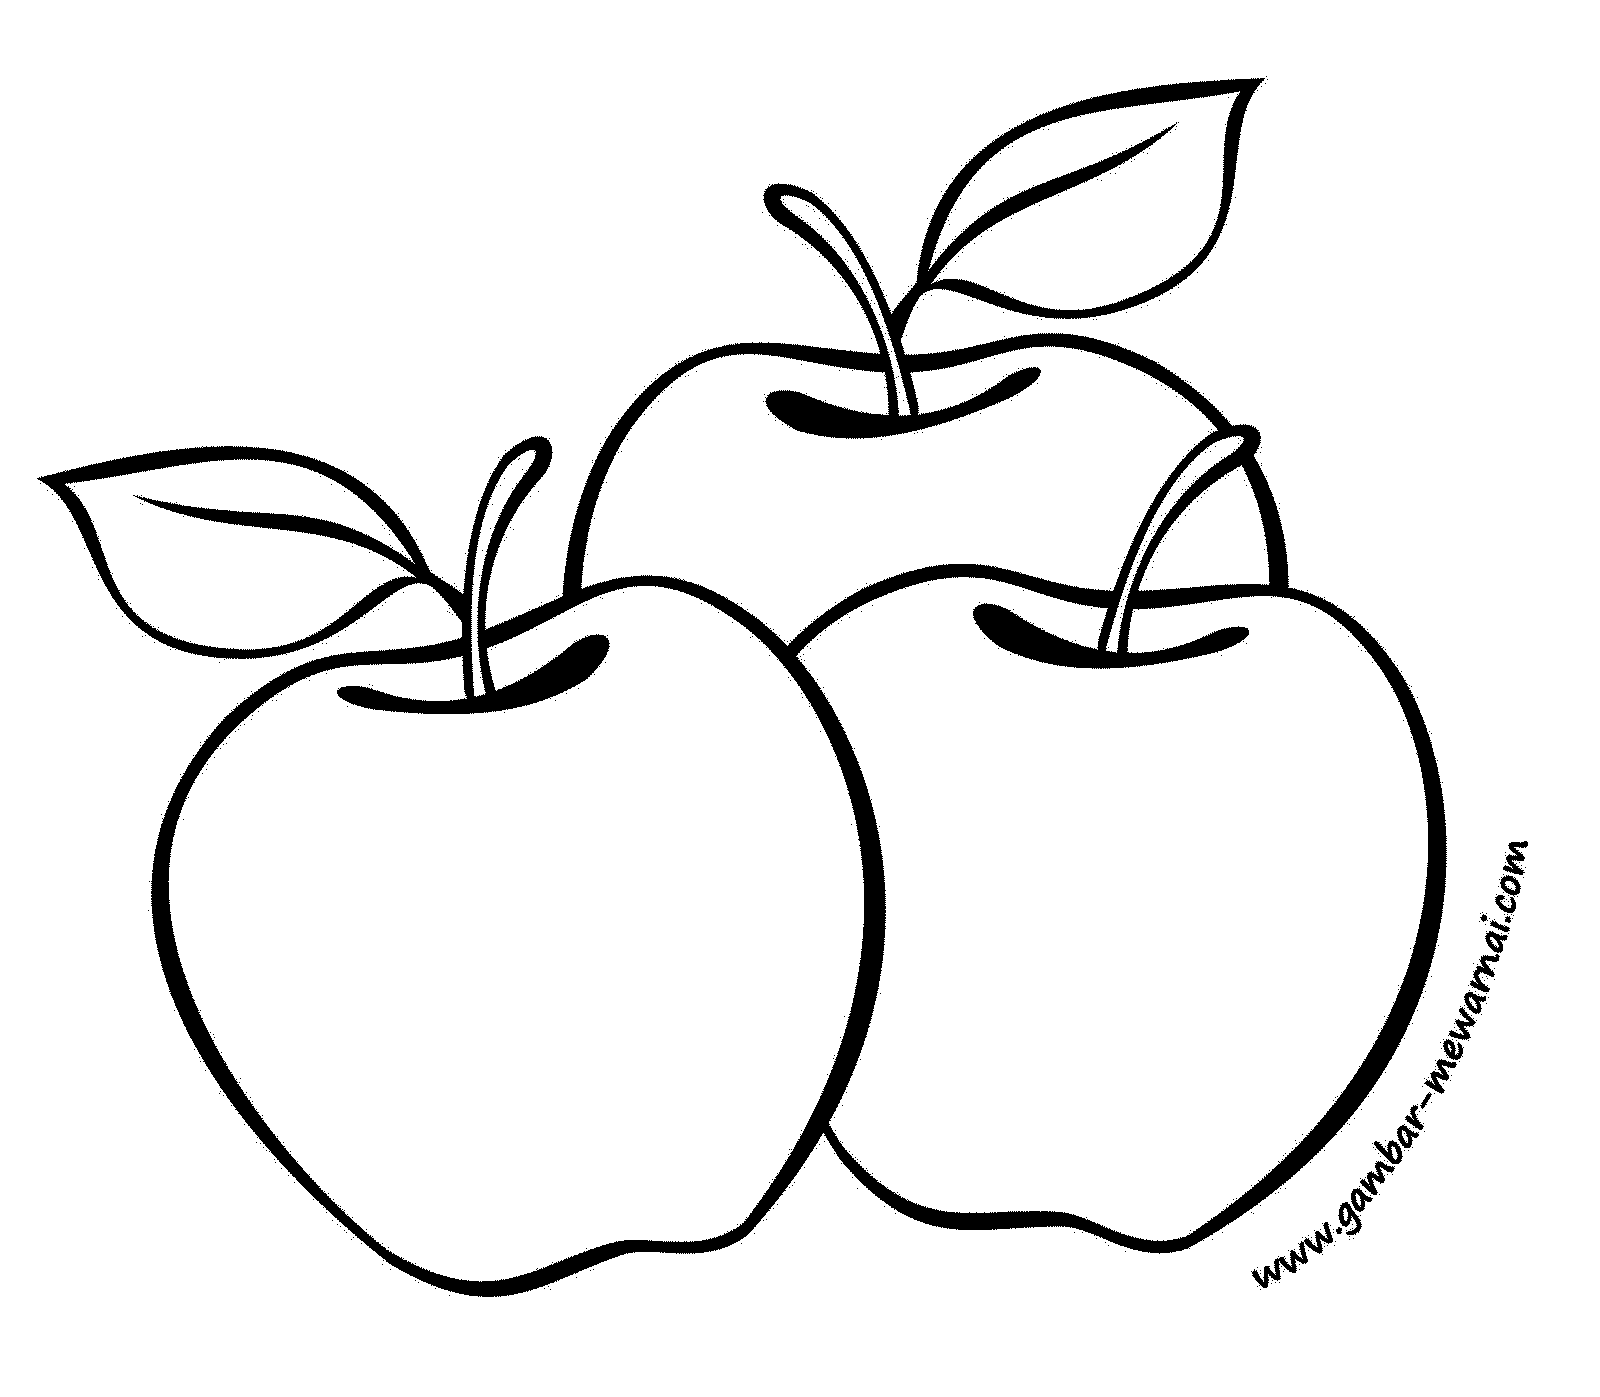 Kumpulan Gambar Kartun Pohon Apel